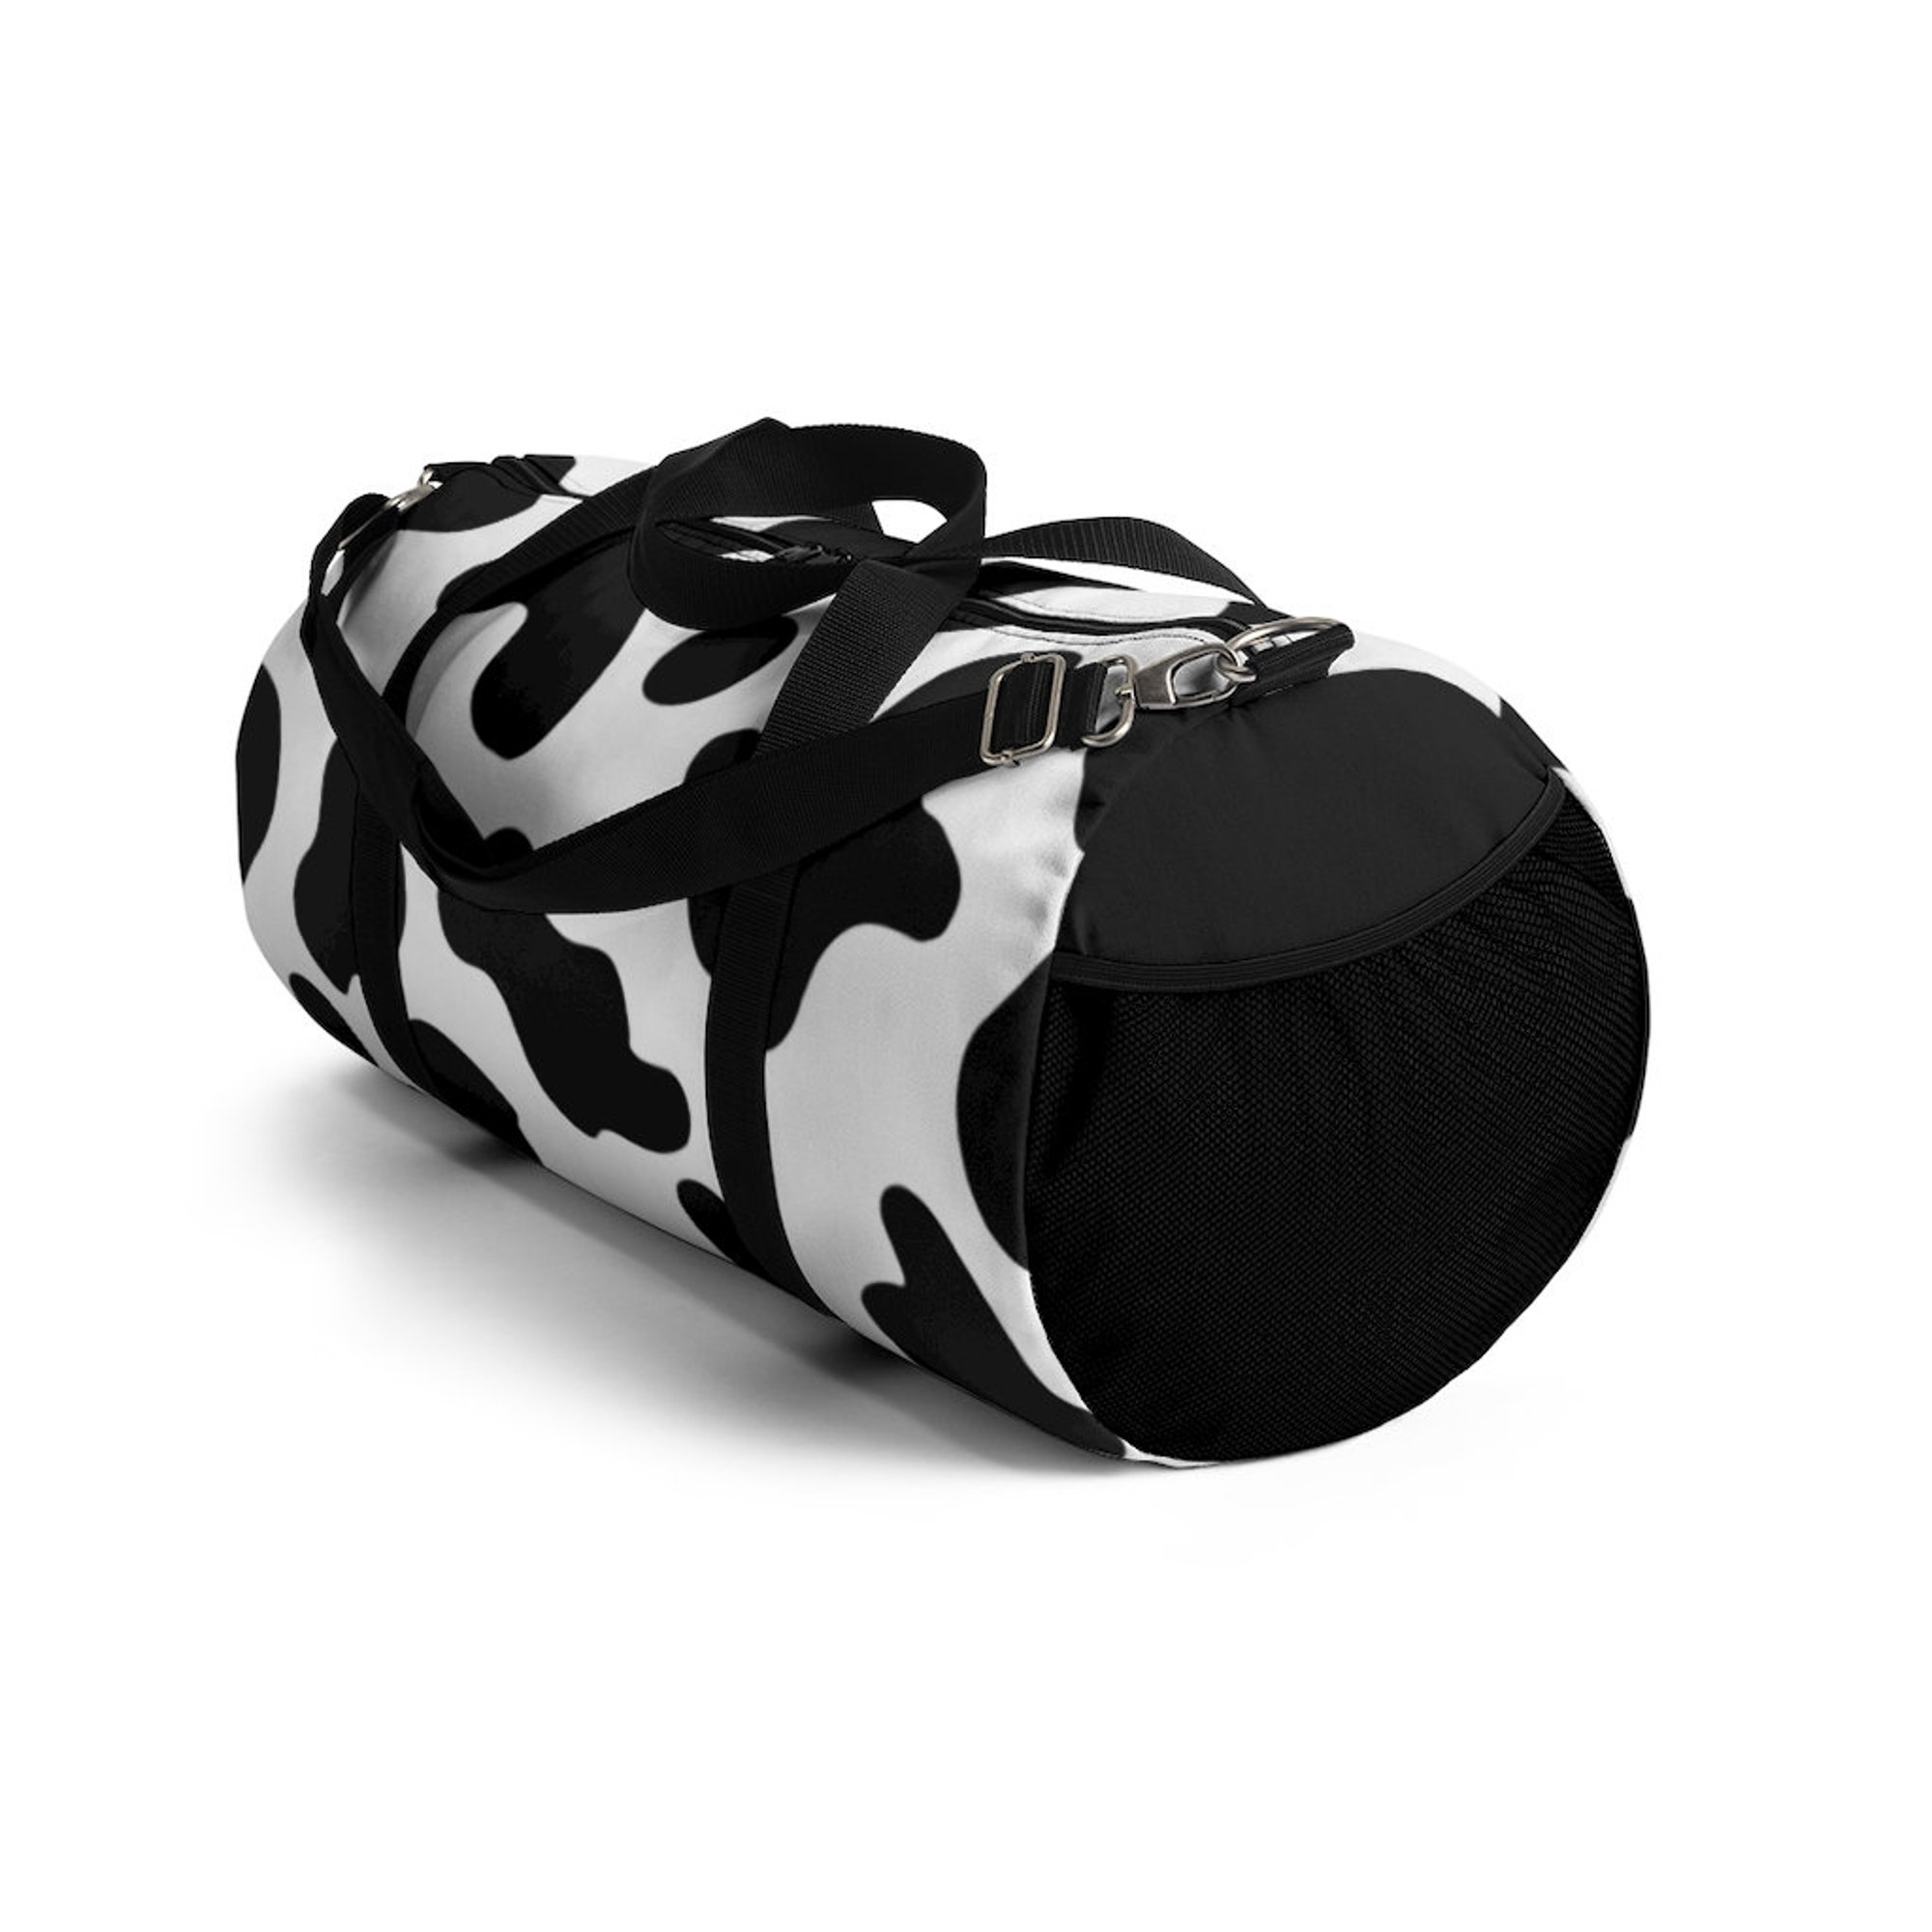 Cow Print Duffle Bag